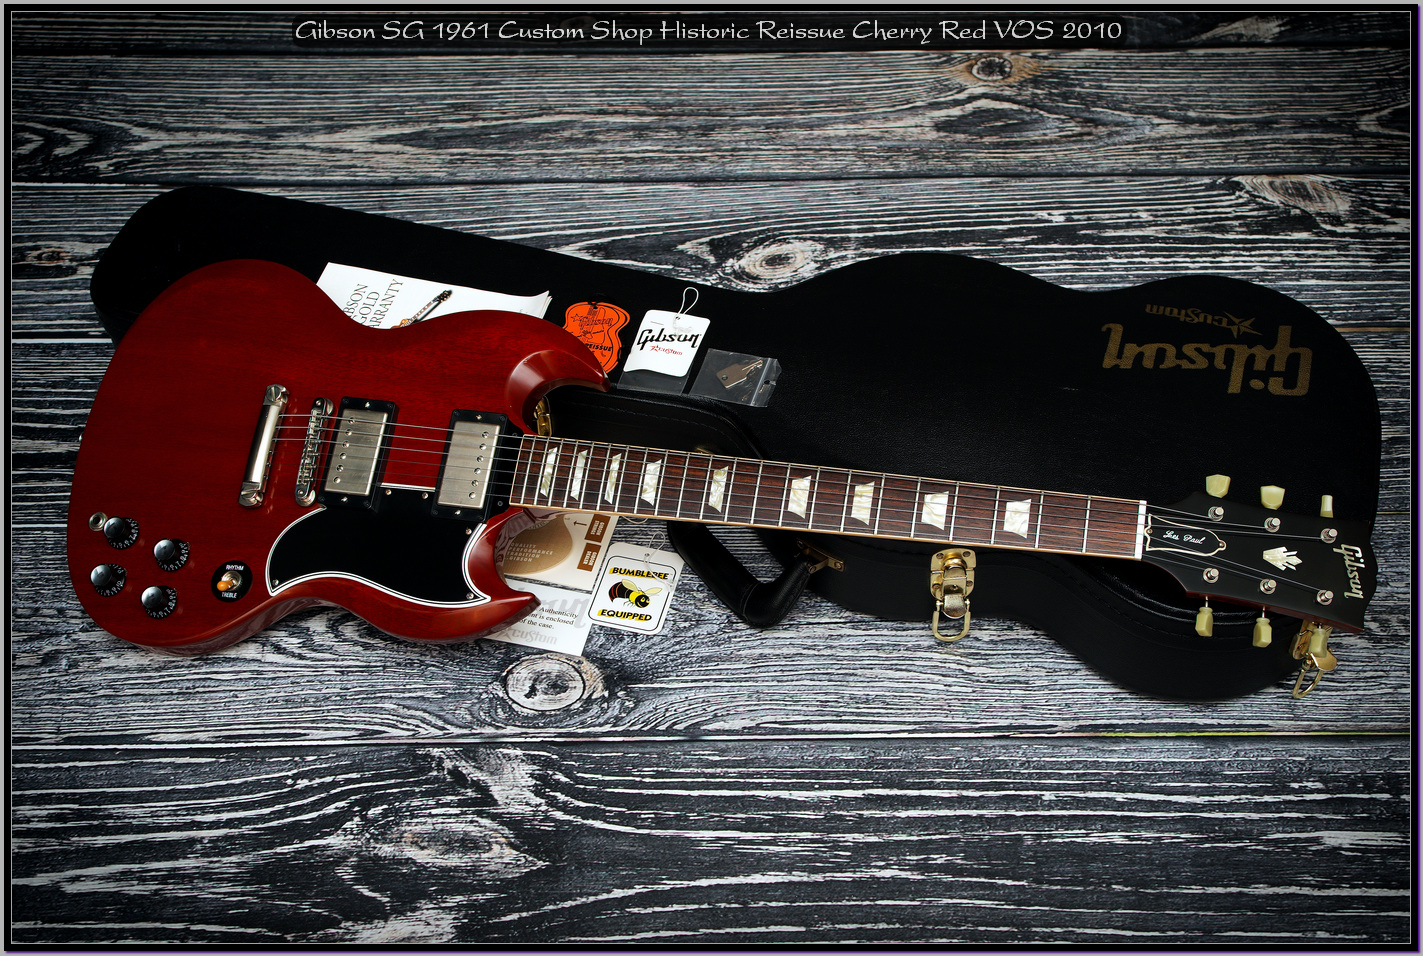 Gibson SG 1961 Custom Shop Historic Reissue Cherry Red VOS 2010 03_x1400.jpg